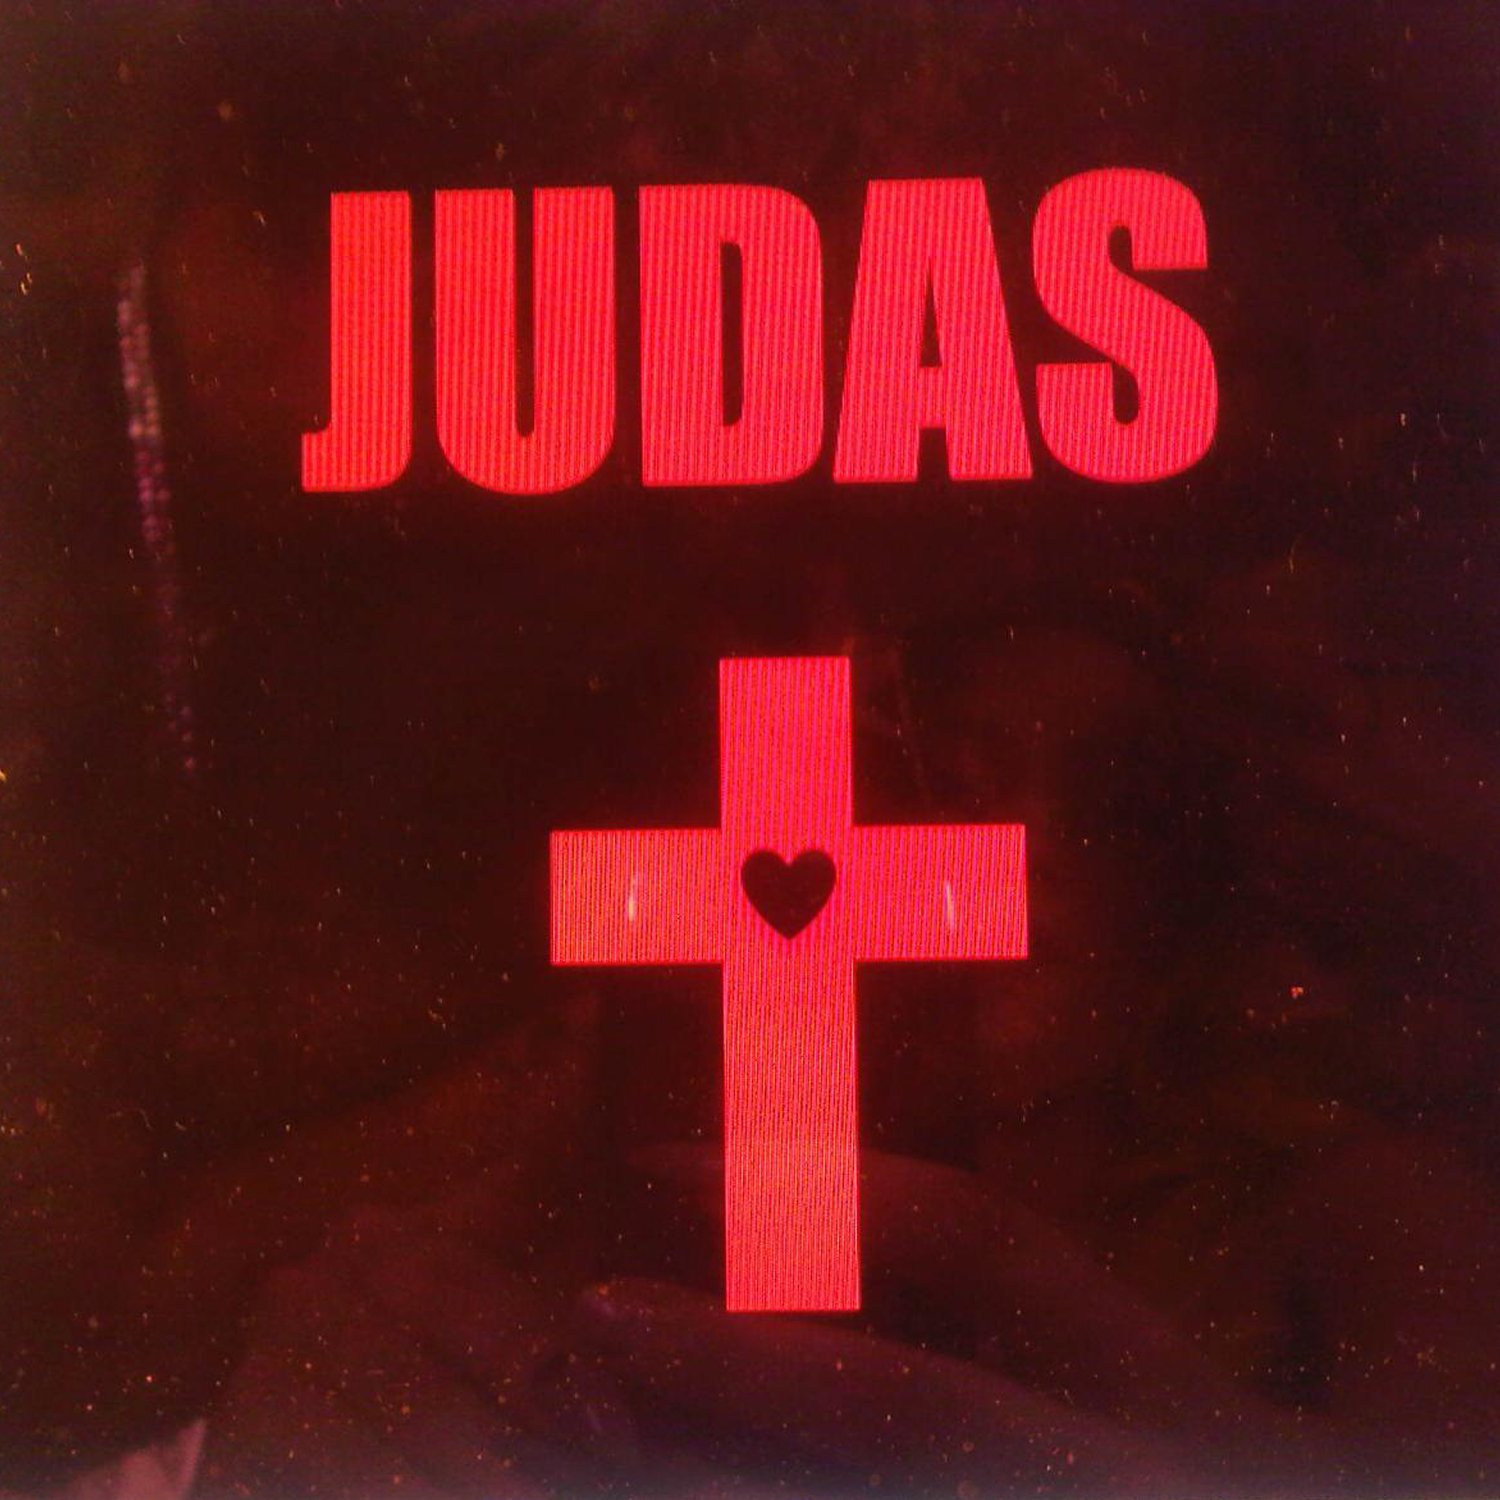 judas-cd-cover1.jpg